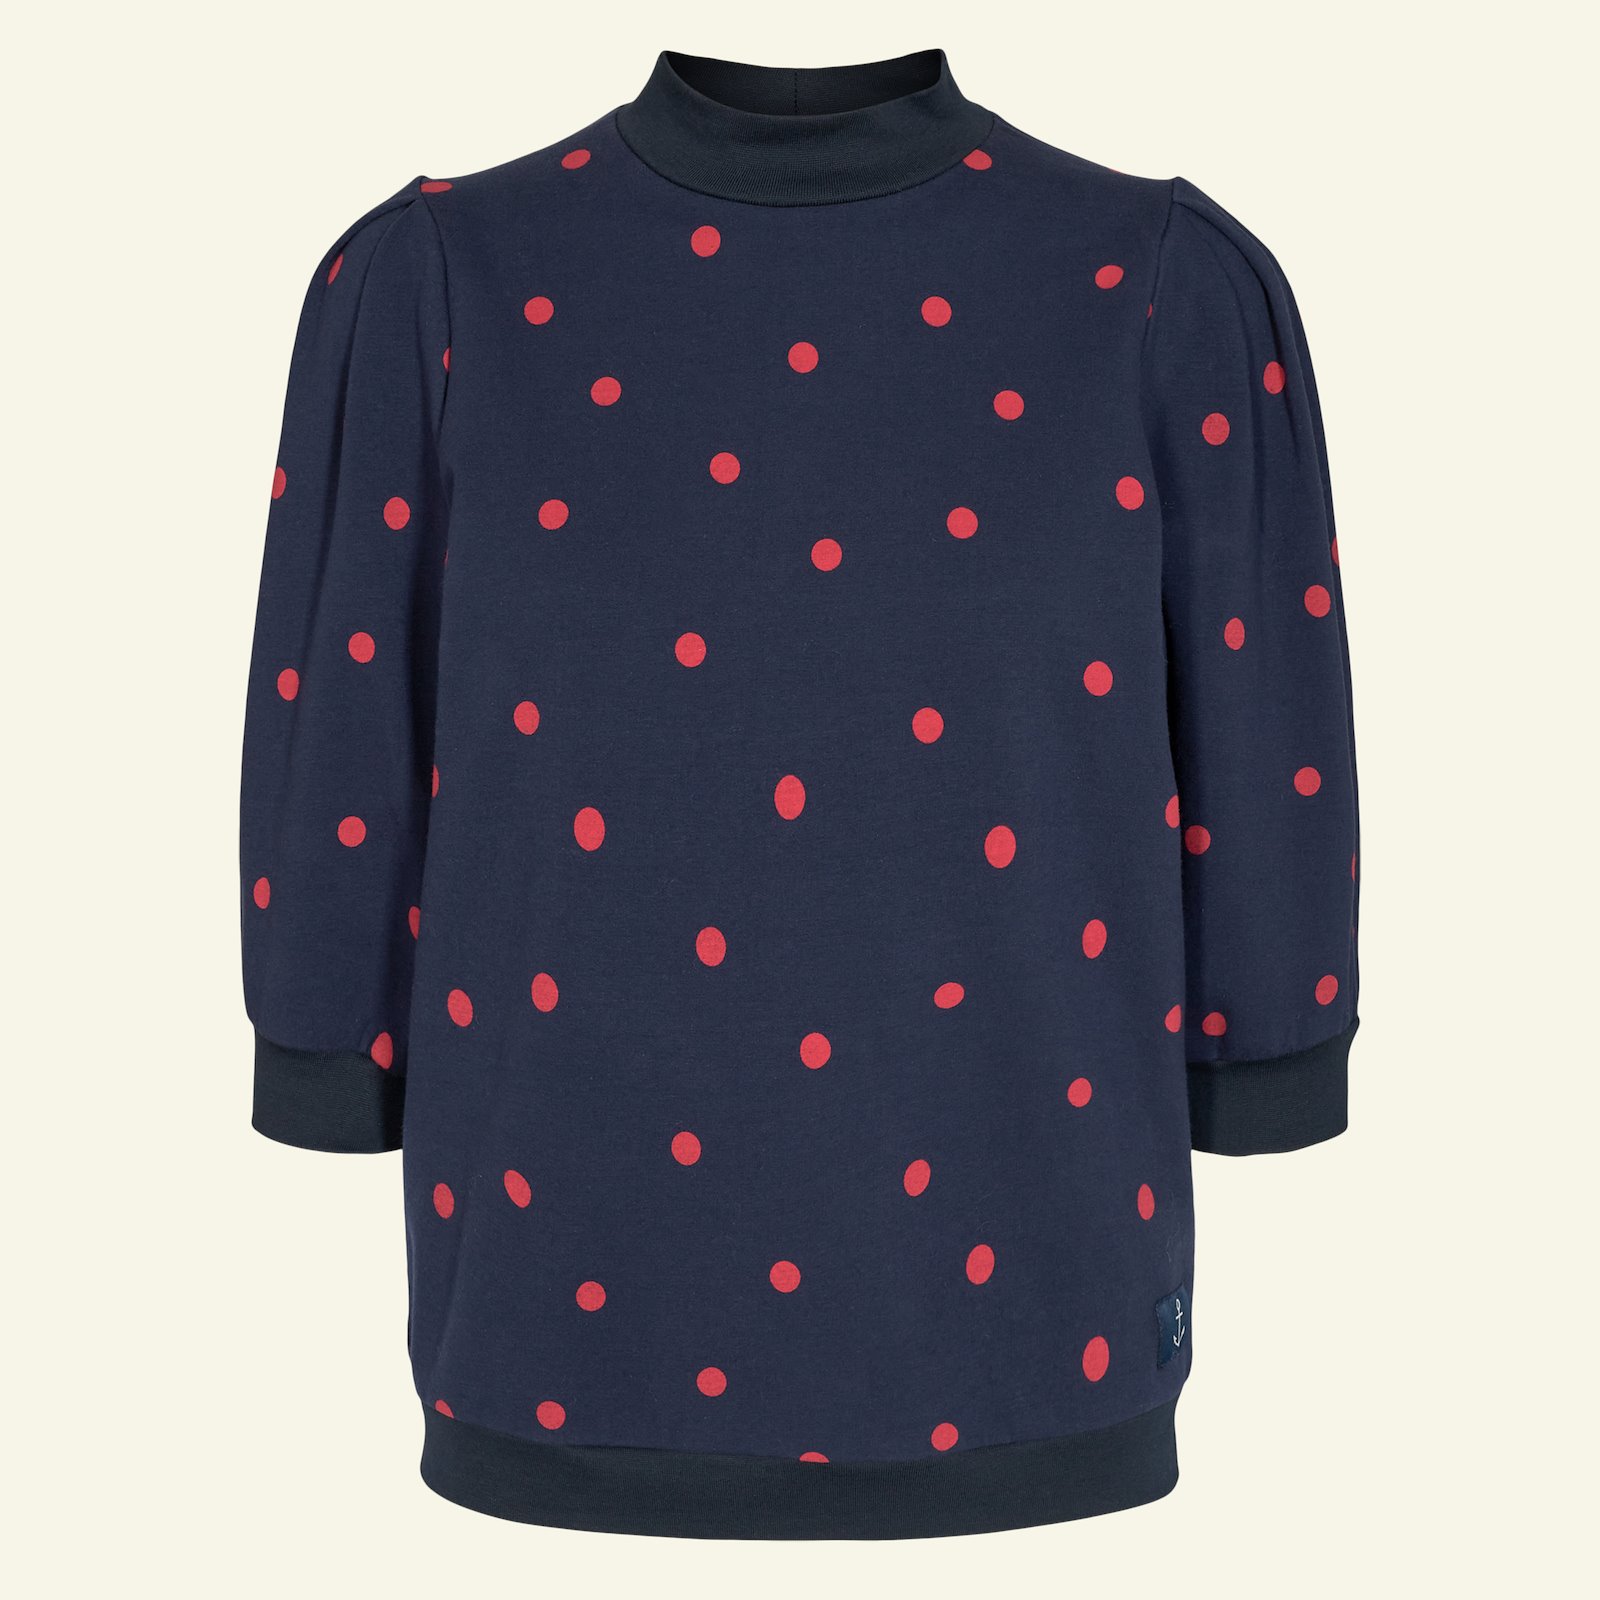 Sweatshirt with puff sleeves, XL p22074_211783_230639_sskit